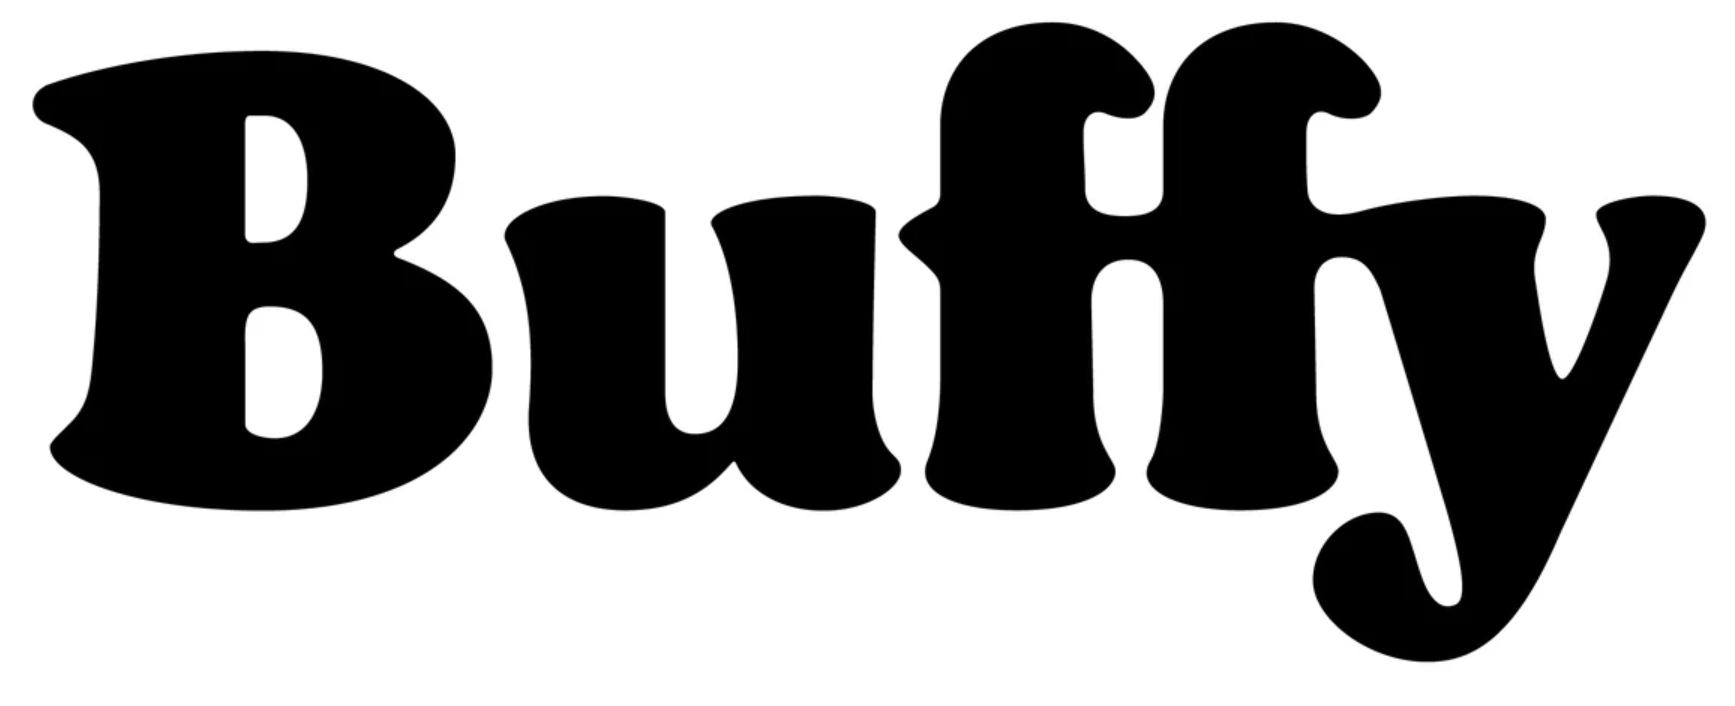 buffy_logo